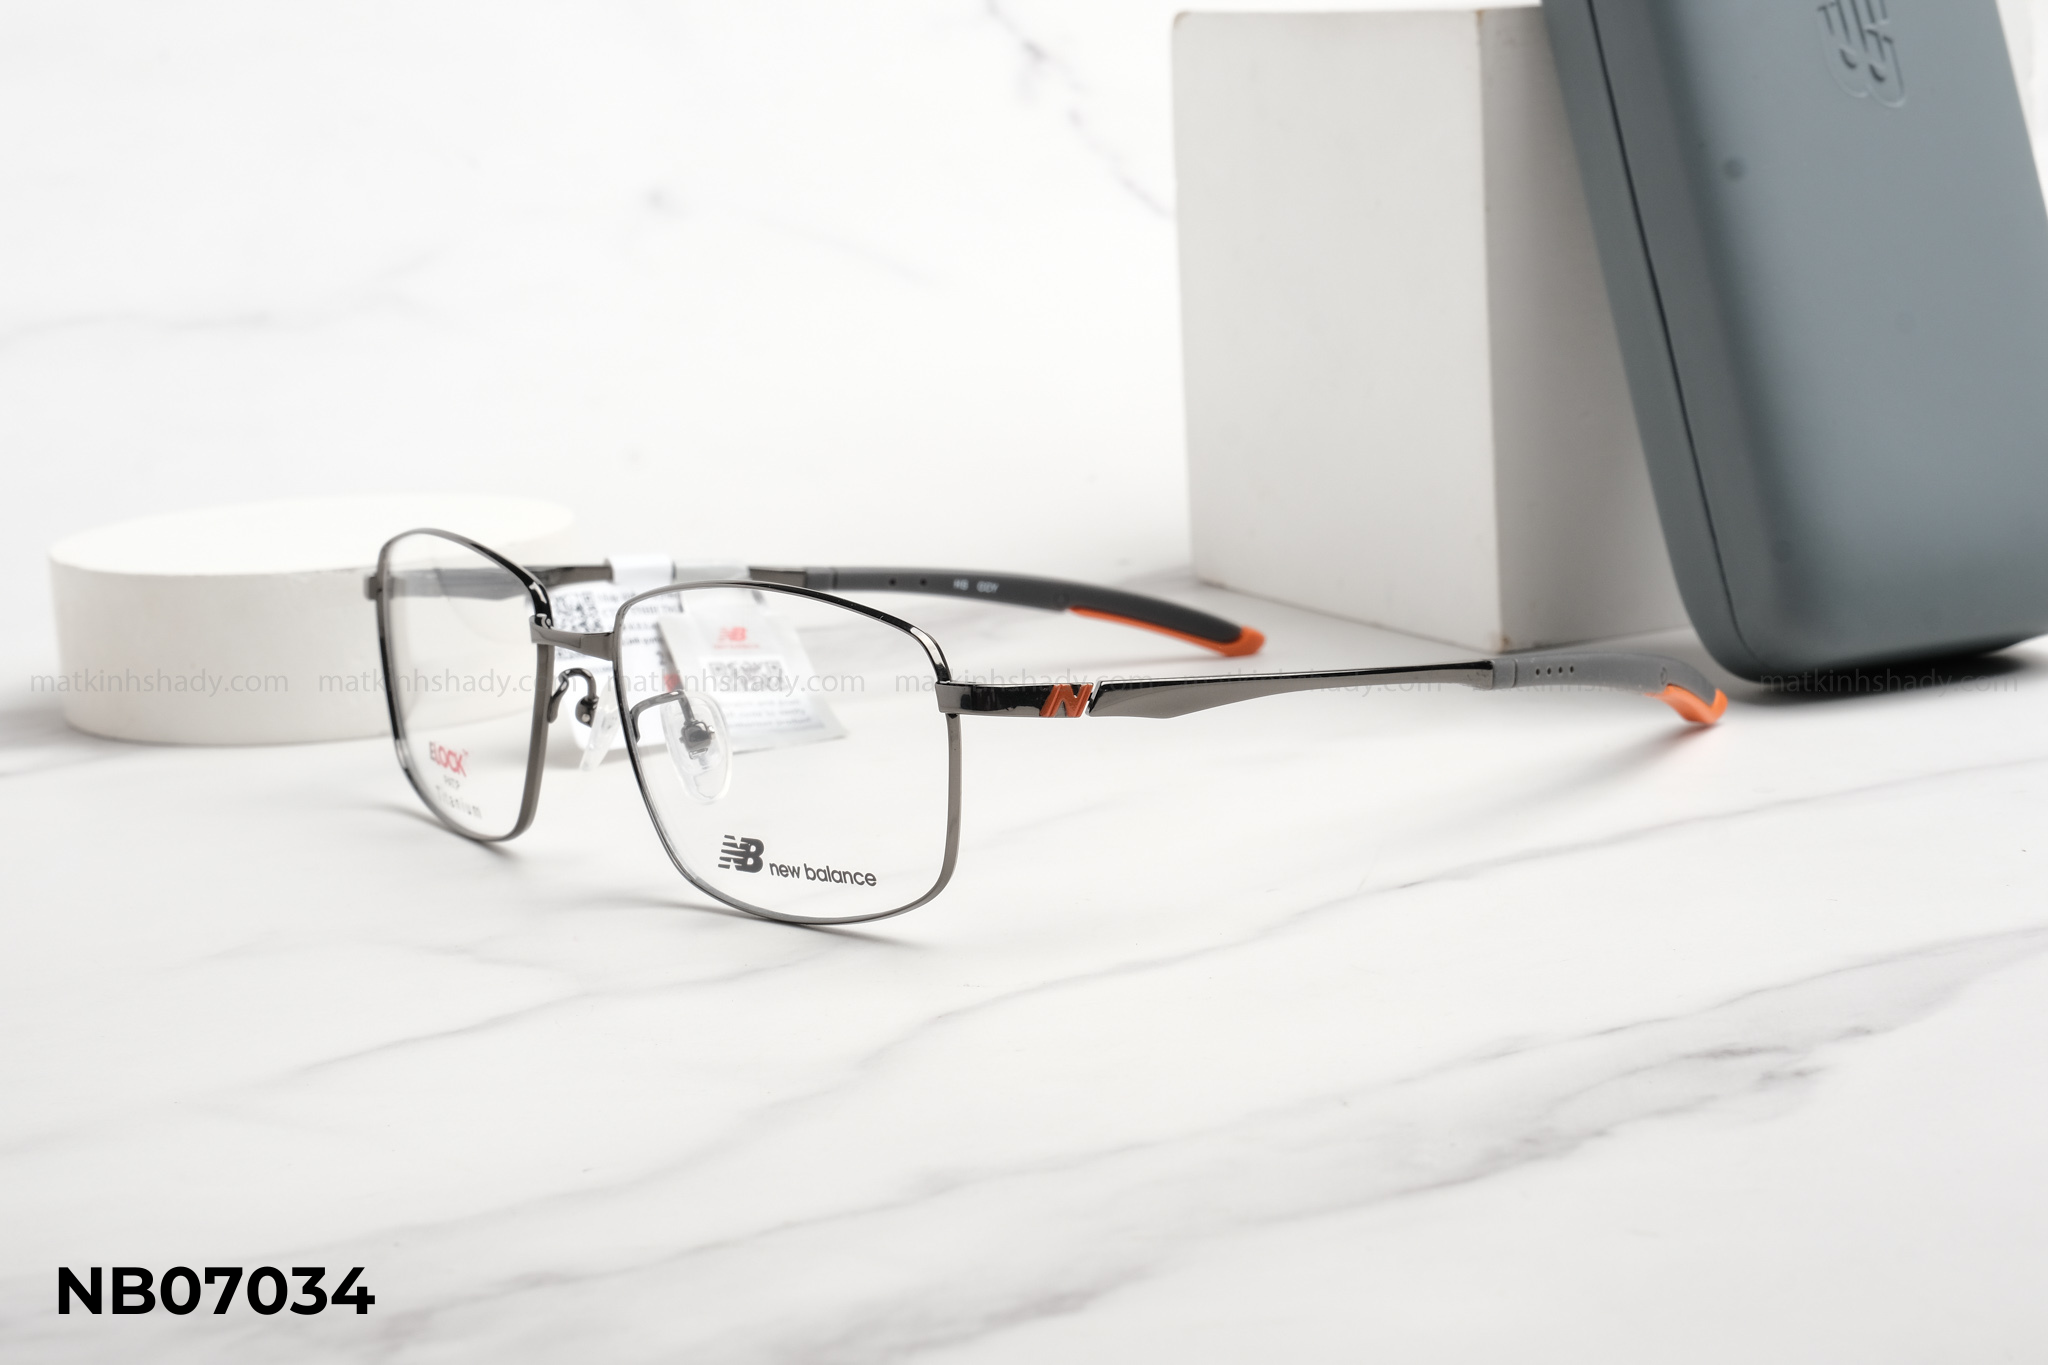  New Balance Eyewear - Glasses - NB07034 